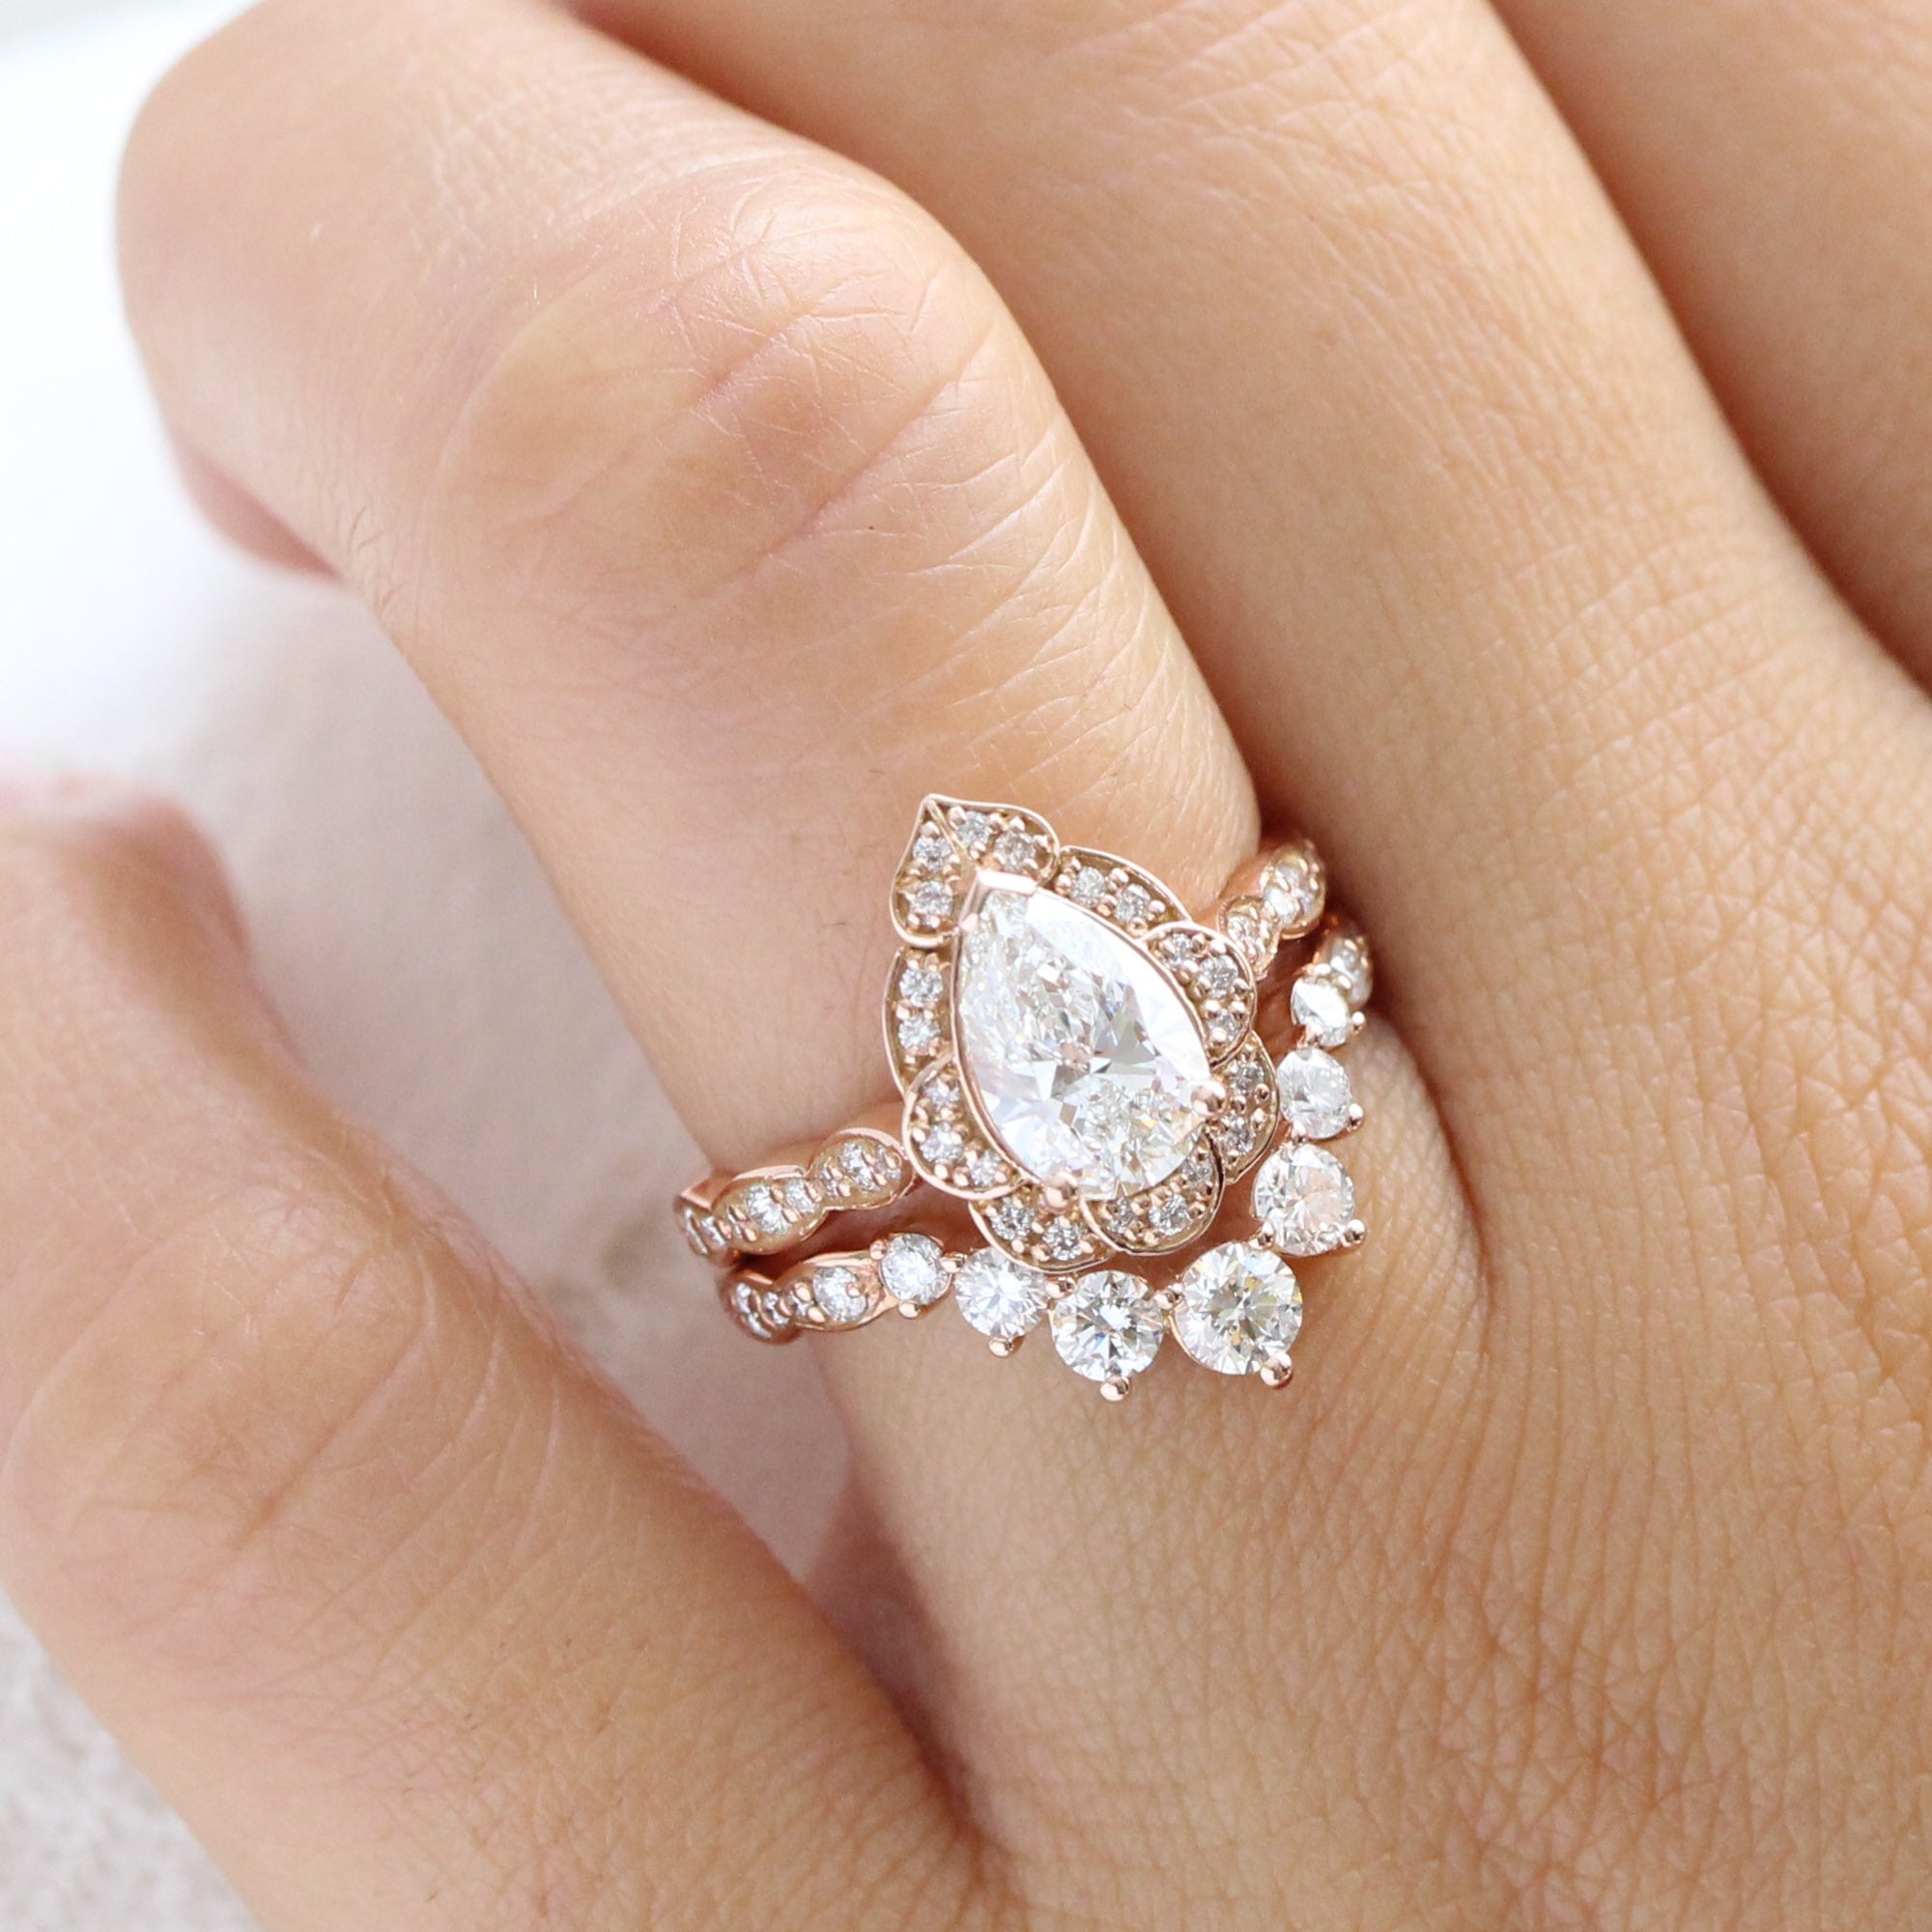 lab diamond ring stack rose gold vintage halo pear diamond engagement ring set La More Design Jewelry